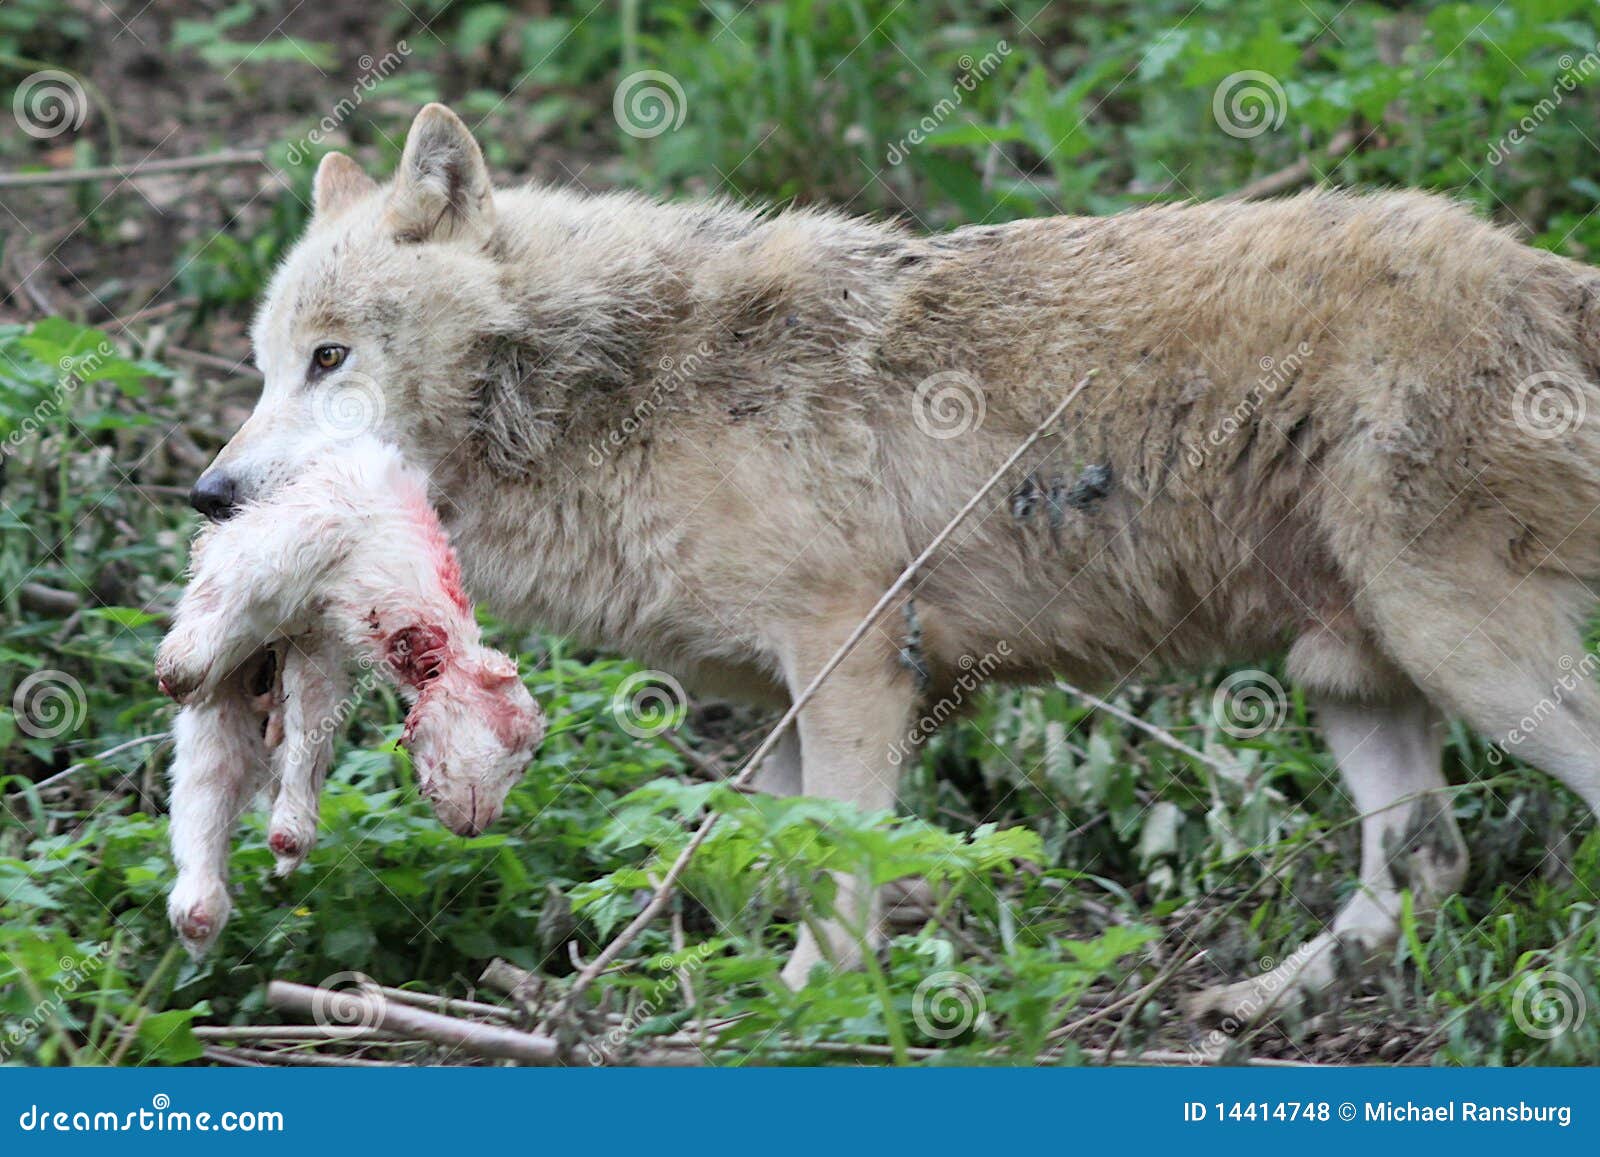 Lobo con la presa foto de archivo. Imagen de animal, piel - 14414748